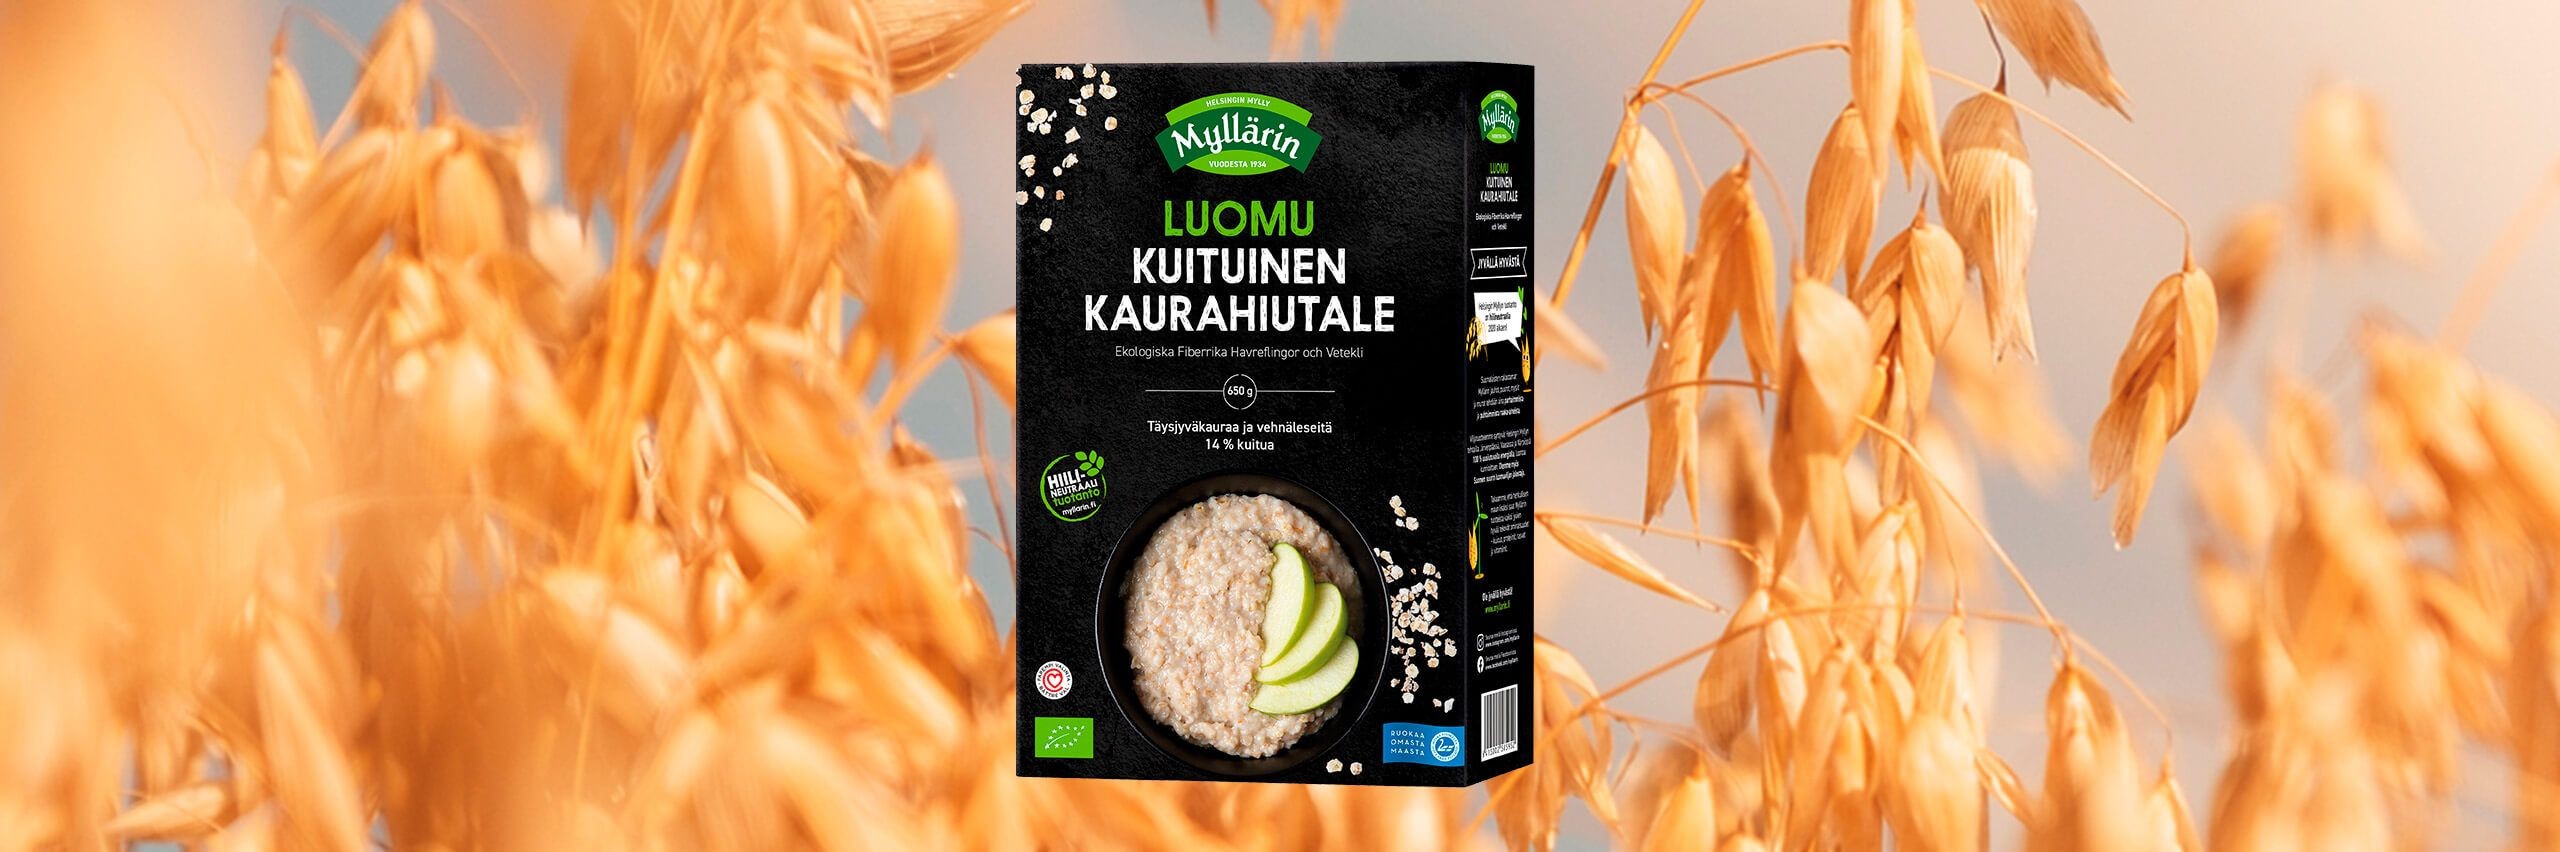 Helsinki Mills organic oat flakes